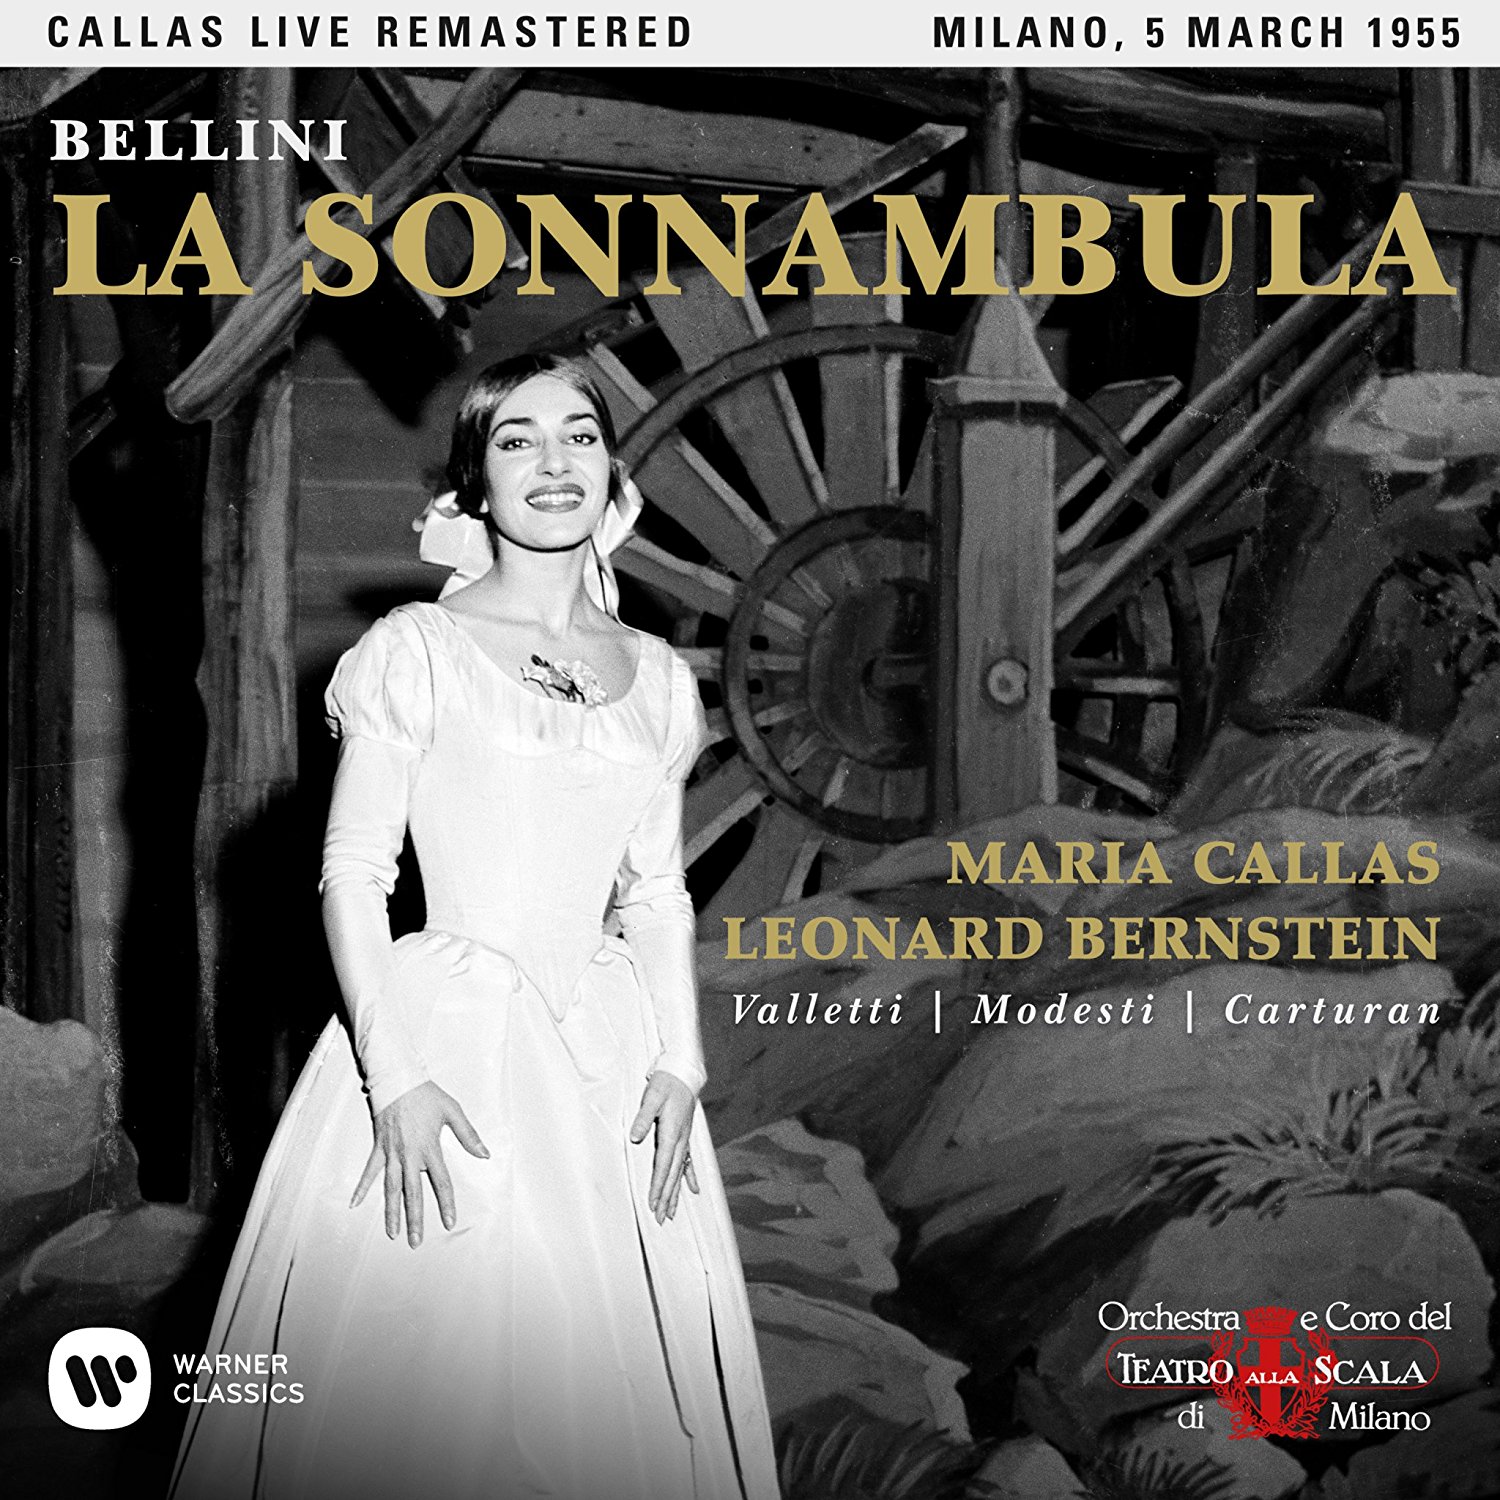 Bellini: La sonnambula | Leonard Bernstein, Maria Callas, Leonard Bernstein Maria Callas image10